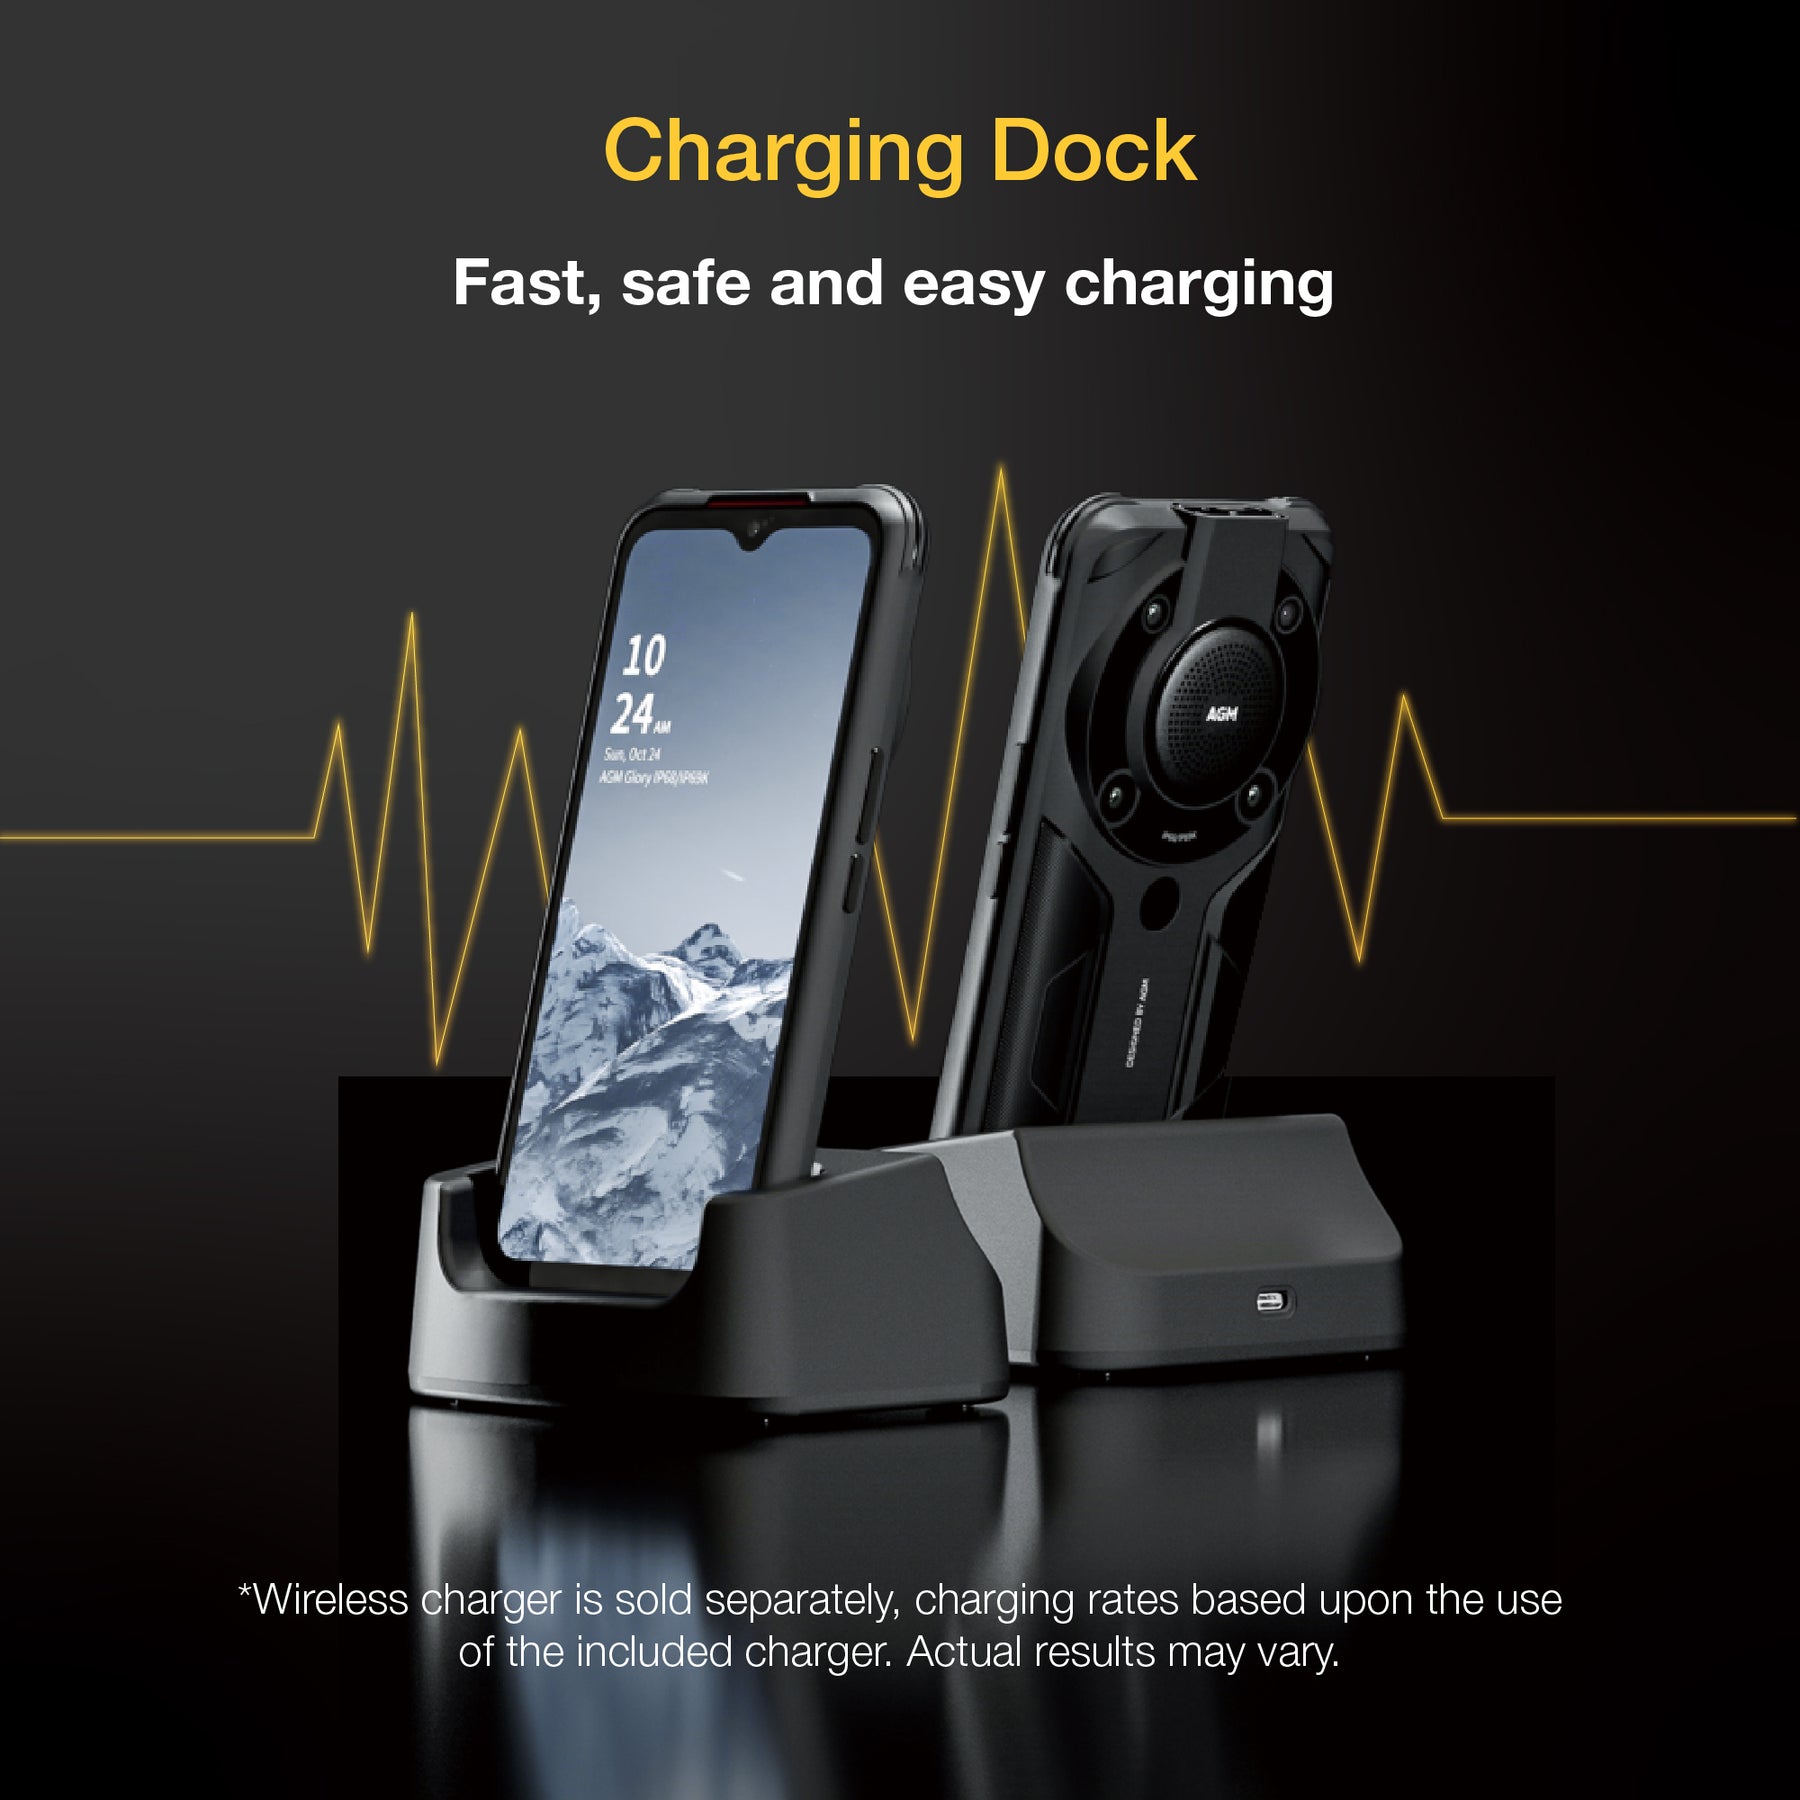 AGM Glory | 5G Unlocked Rugged Smartphone | US Warehouse